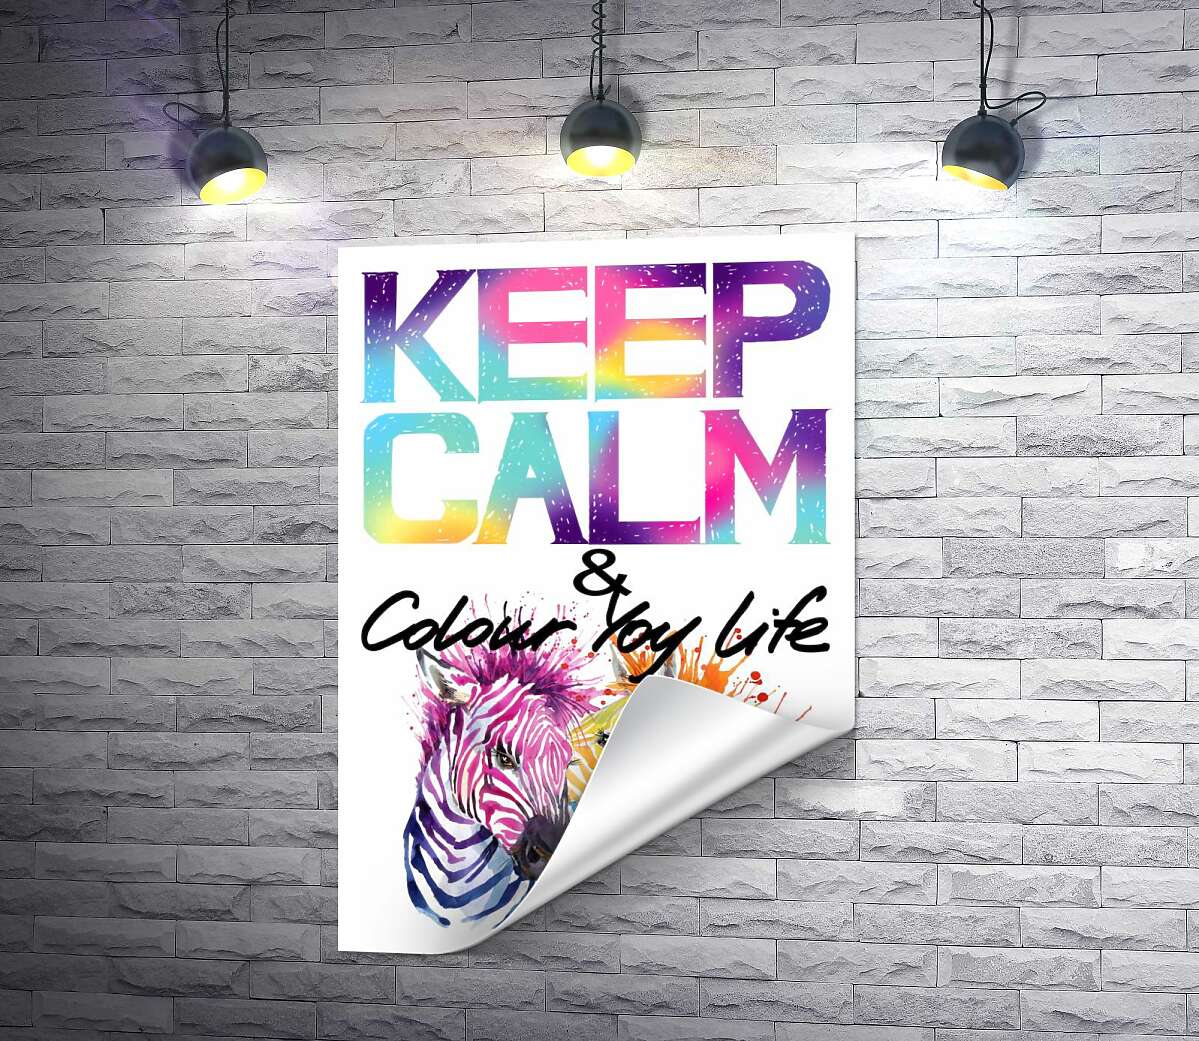 друк Яскраві зебри під написом "keep calm and colour your life"